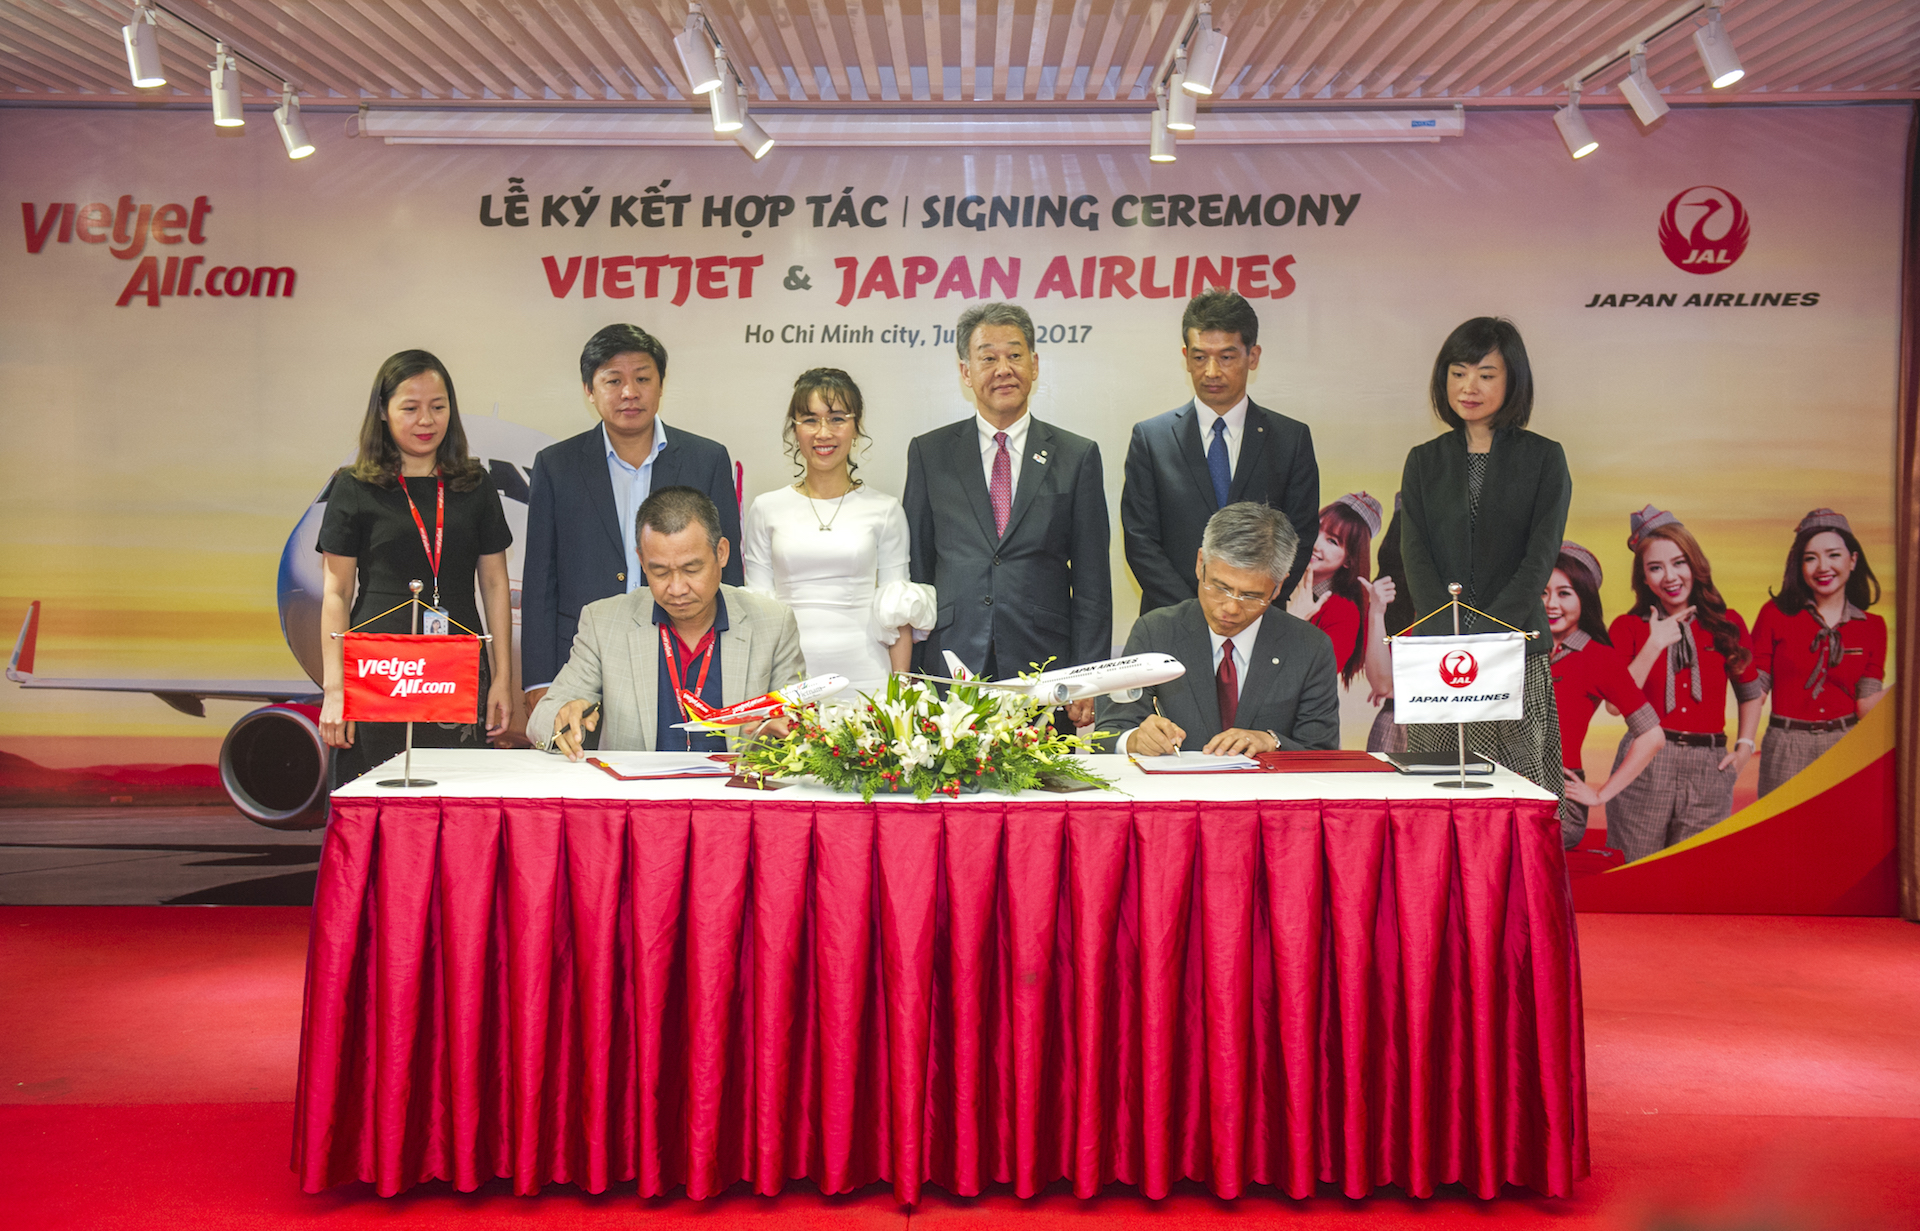 Japan Airlines and Vietjet launch comprehensive partnership